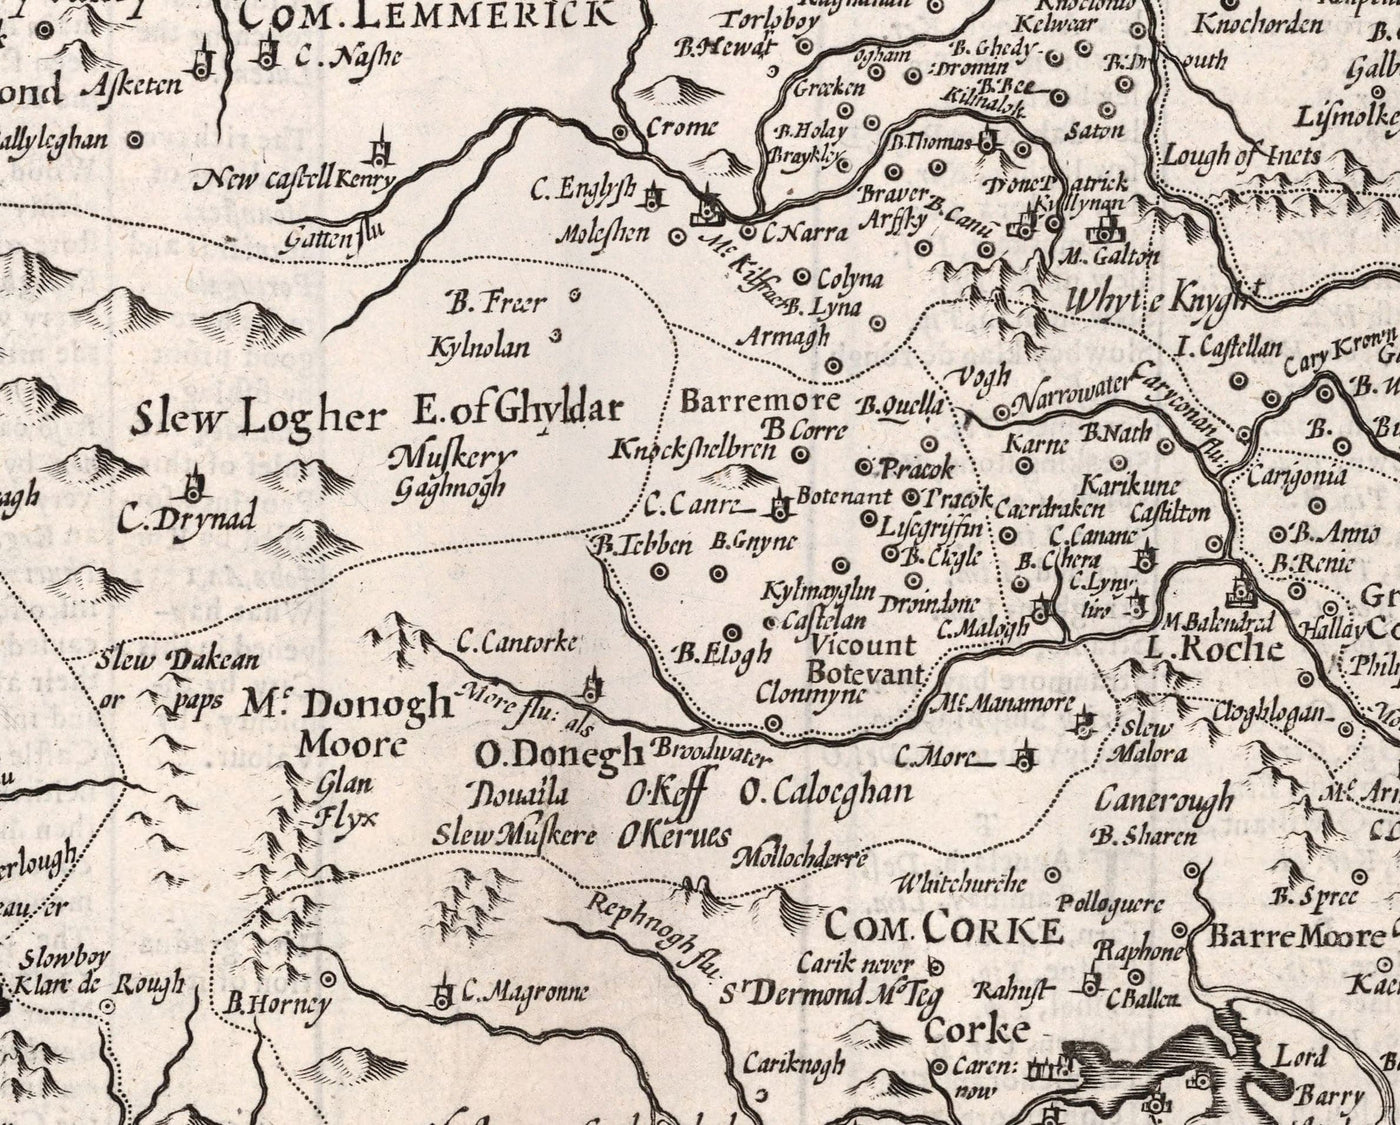 Viejo mapa monocromo de Munster, Irlanda en 1611 por John Speed ​​- County Cork, Clare, Kerry, Limerick, Tipperary, Waterford, Dingle